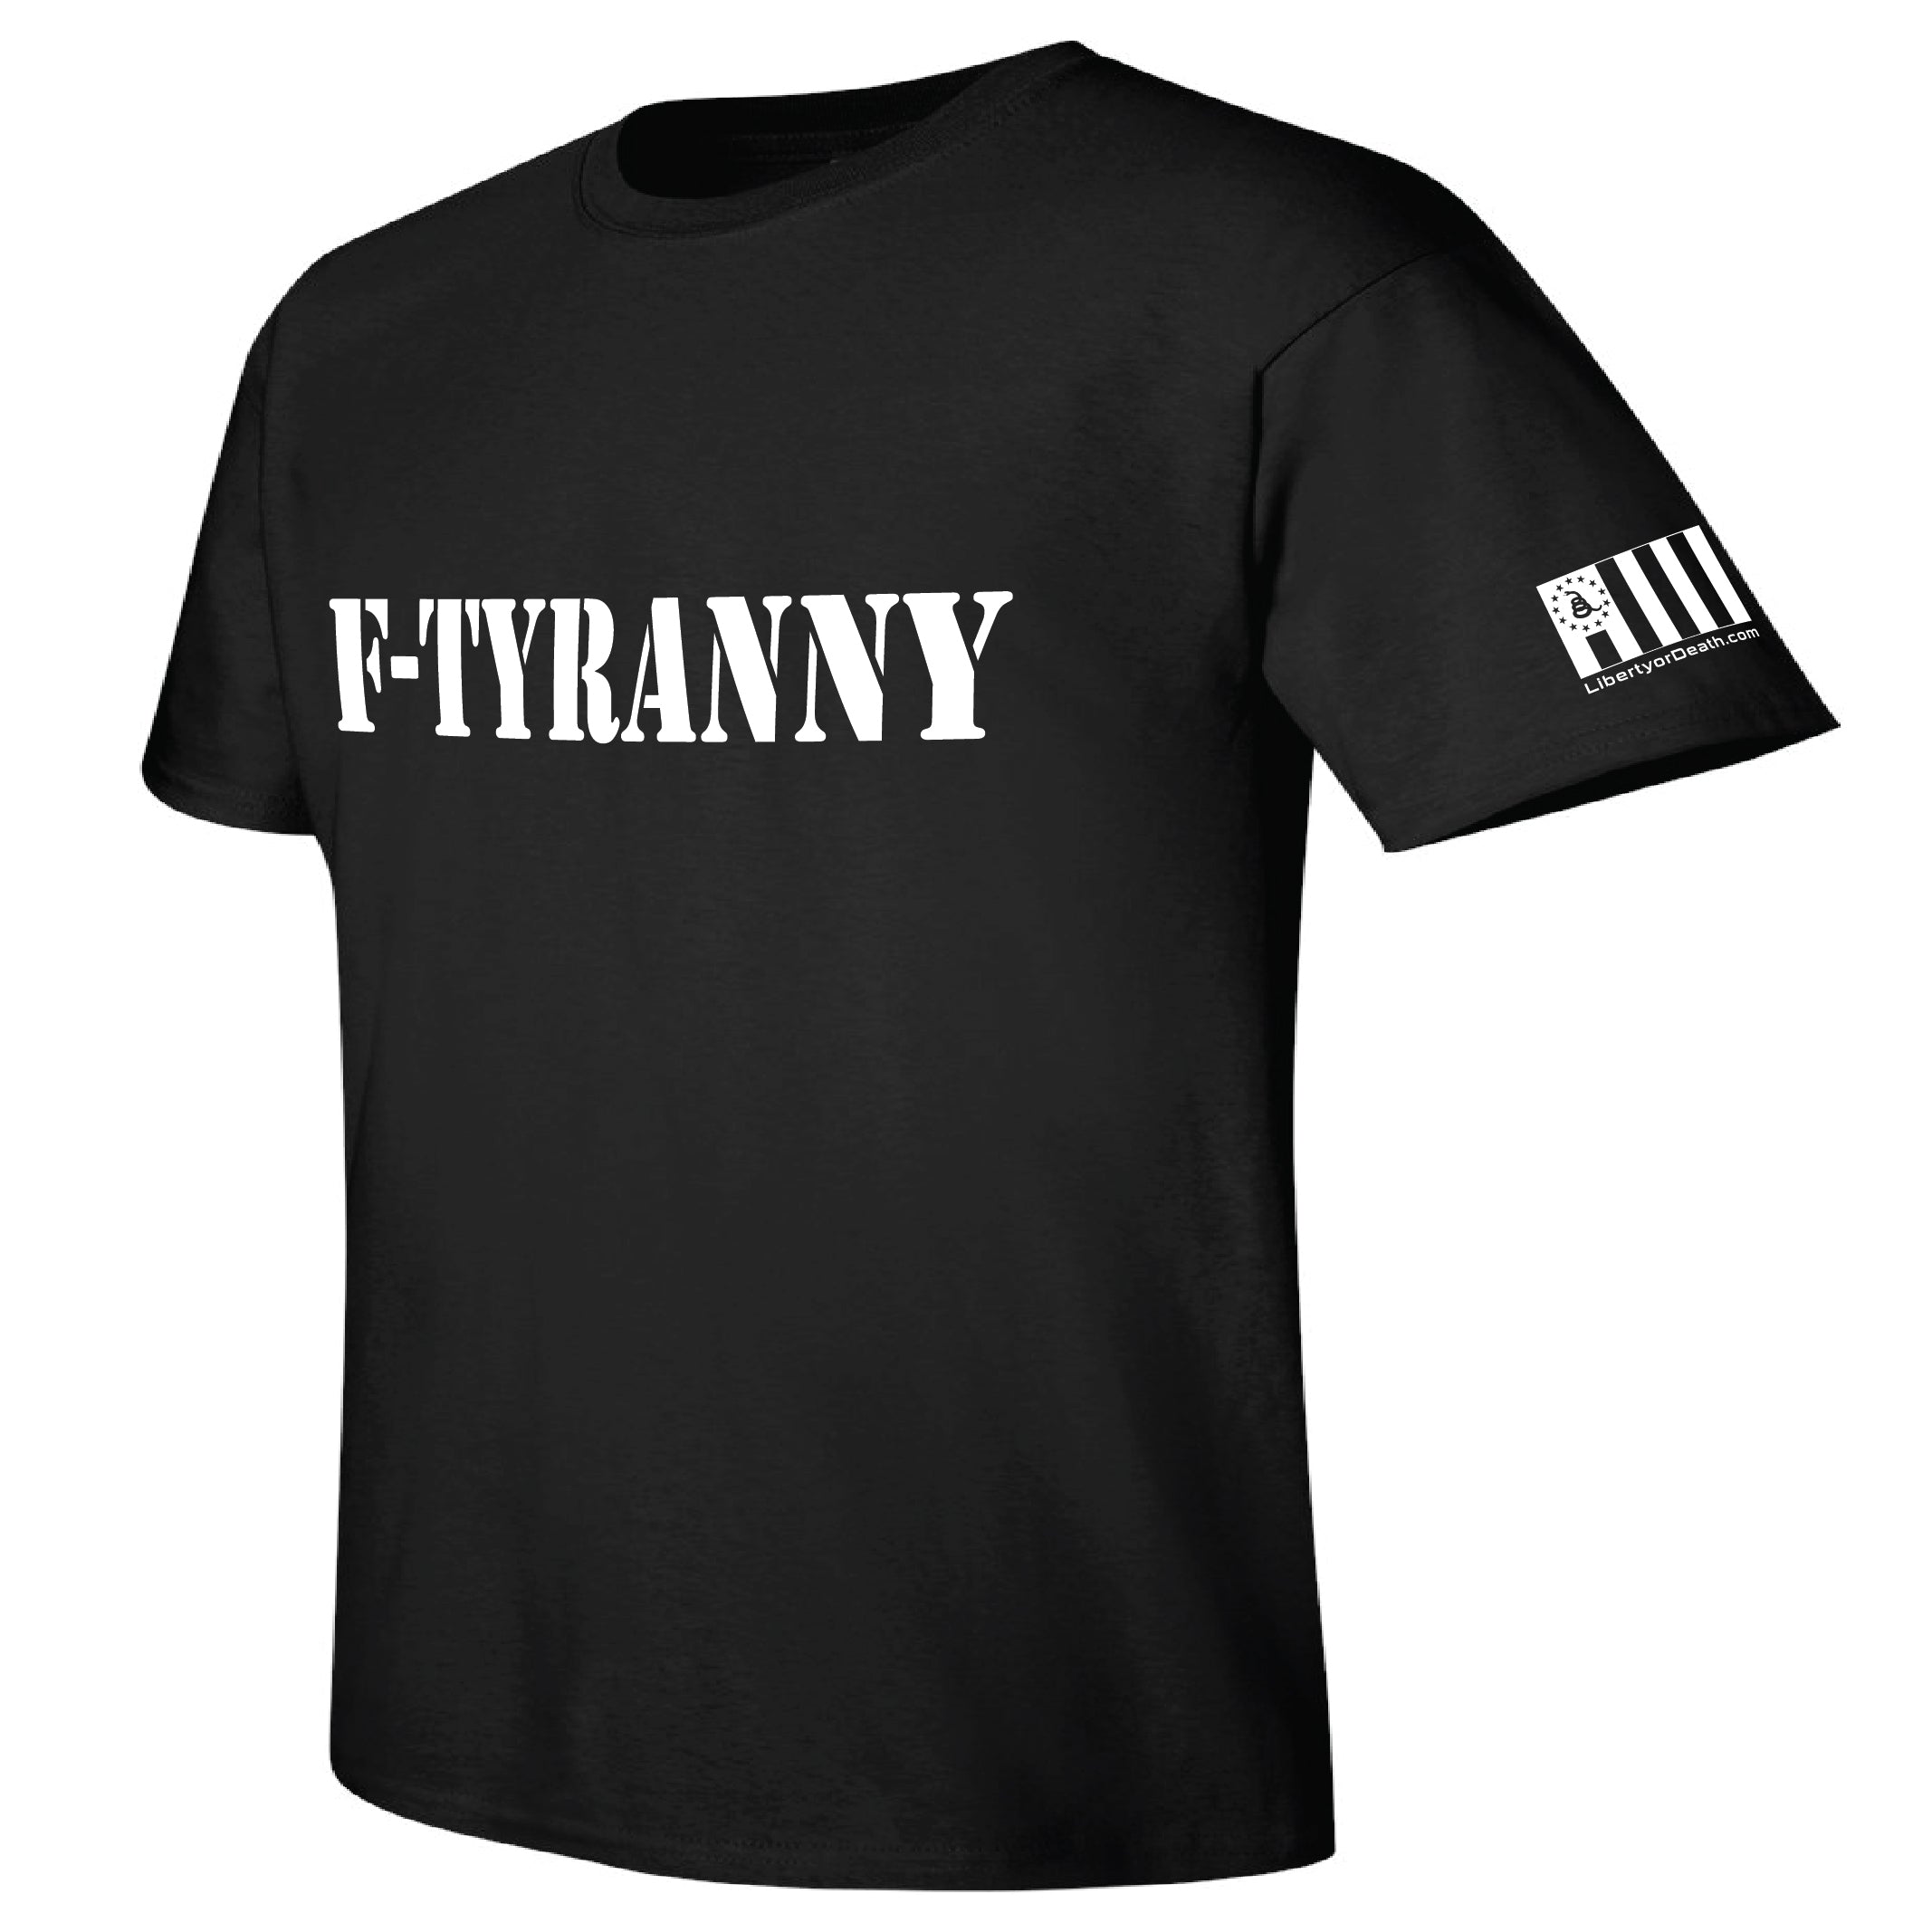 F-Tyranny! T-Shirt